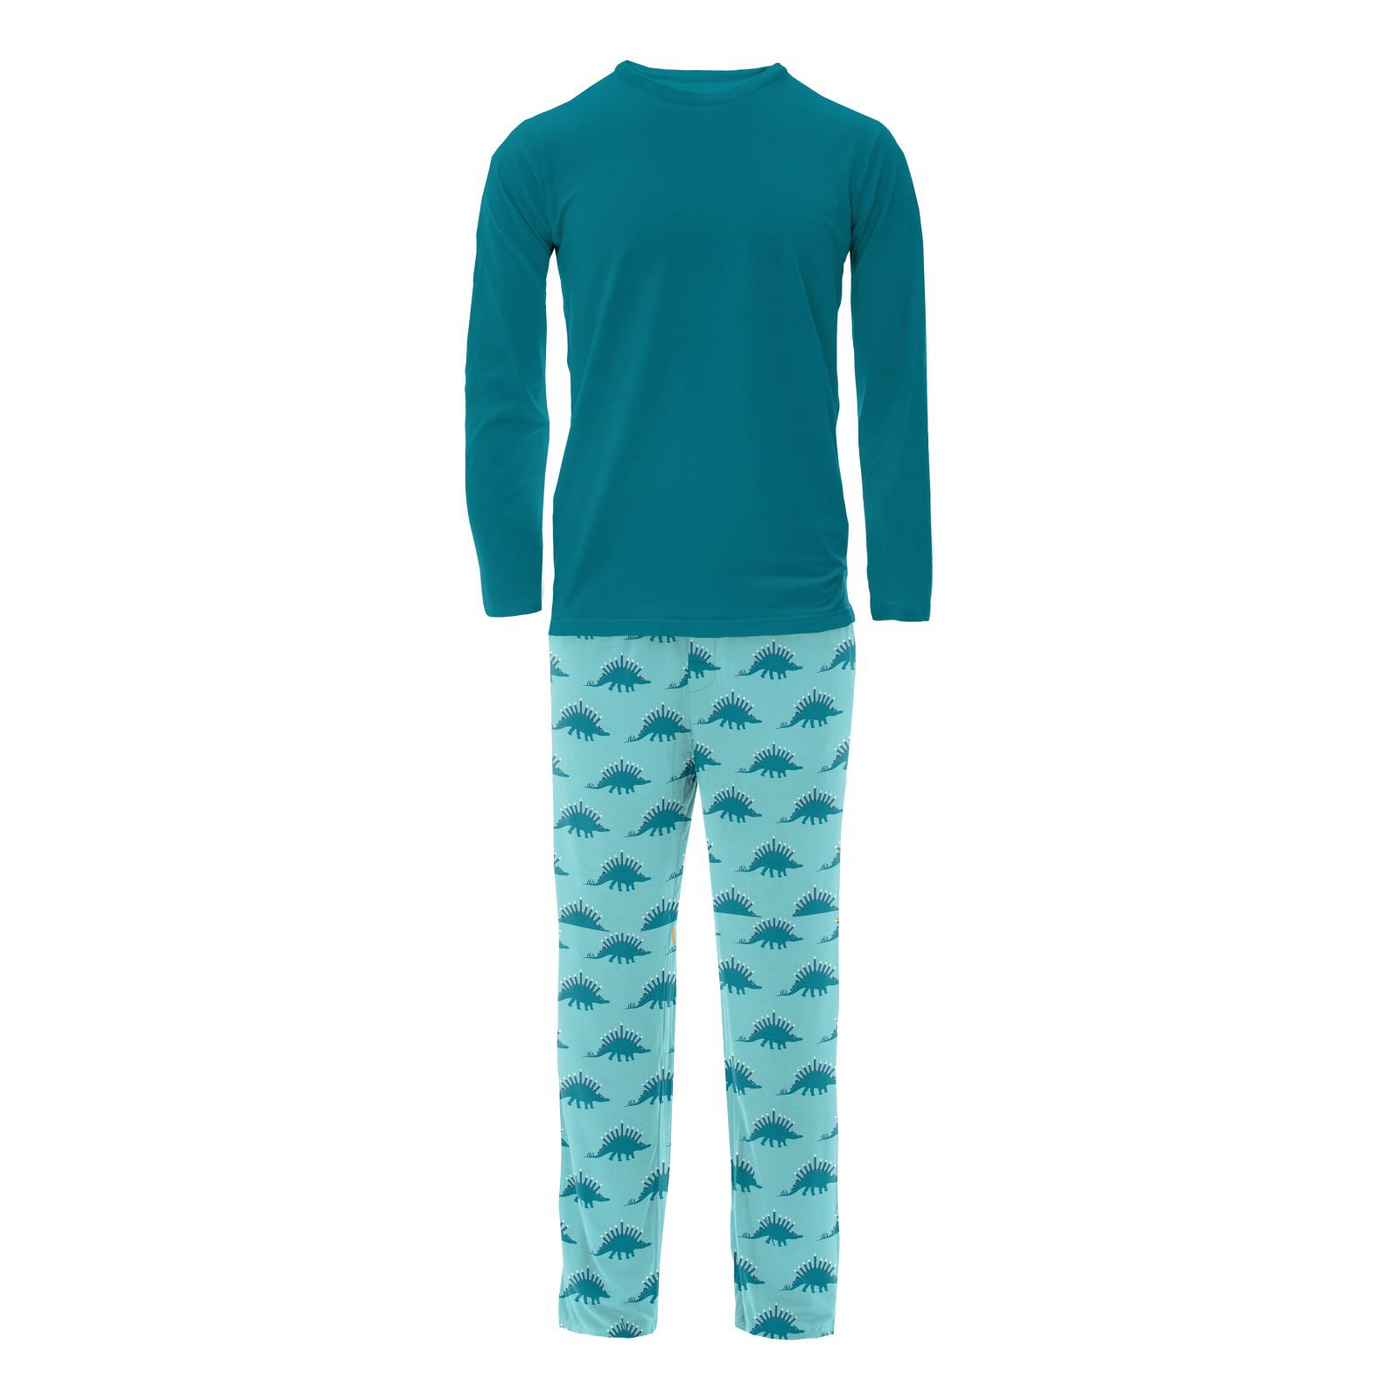 Men's Long Sleeve Pajama Set - Iceberg Menorahsaurus - KicKee Pants-M Pajama-Graceful & Chic Boutique, Family Clothing Store in Waxahachie, Texas